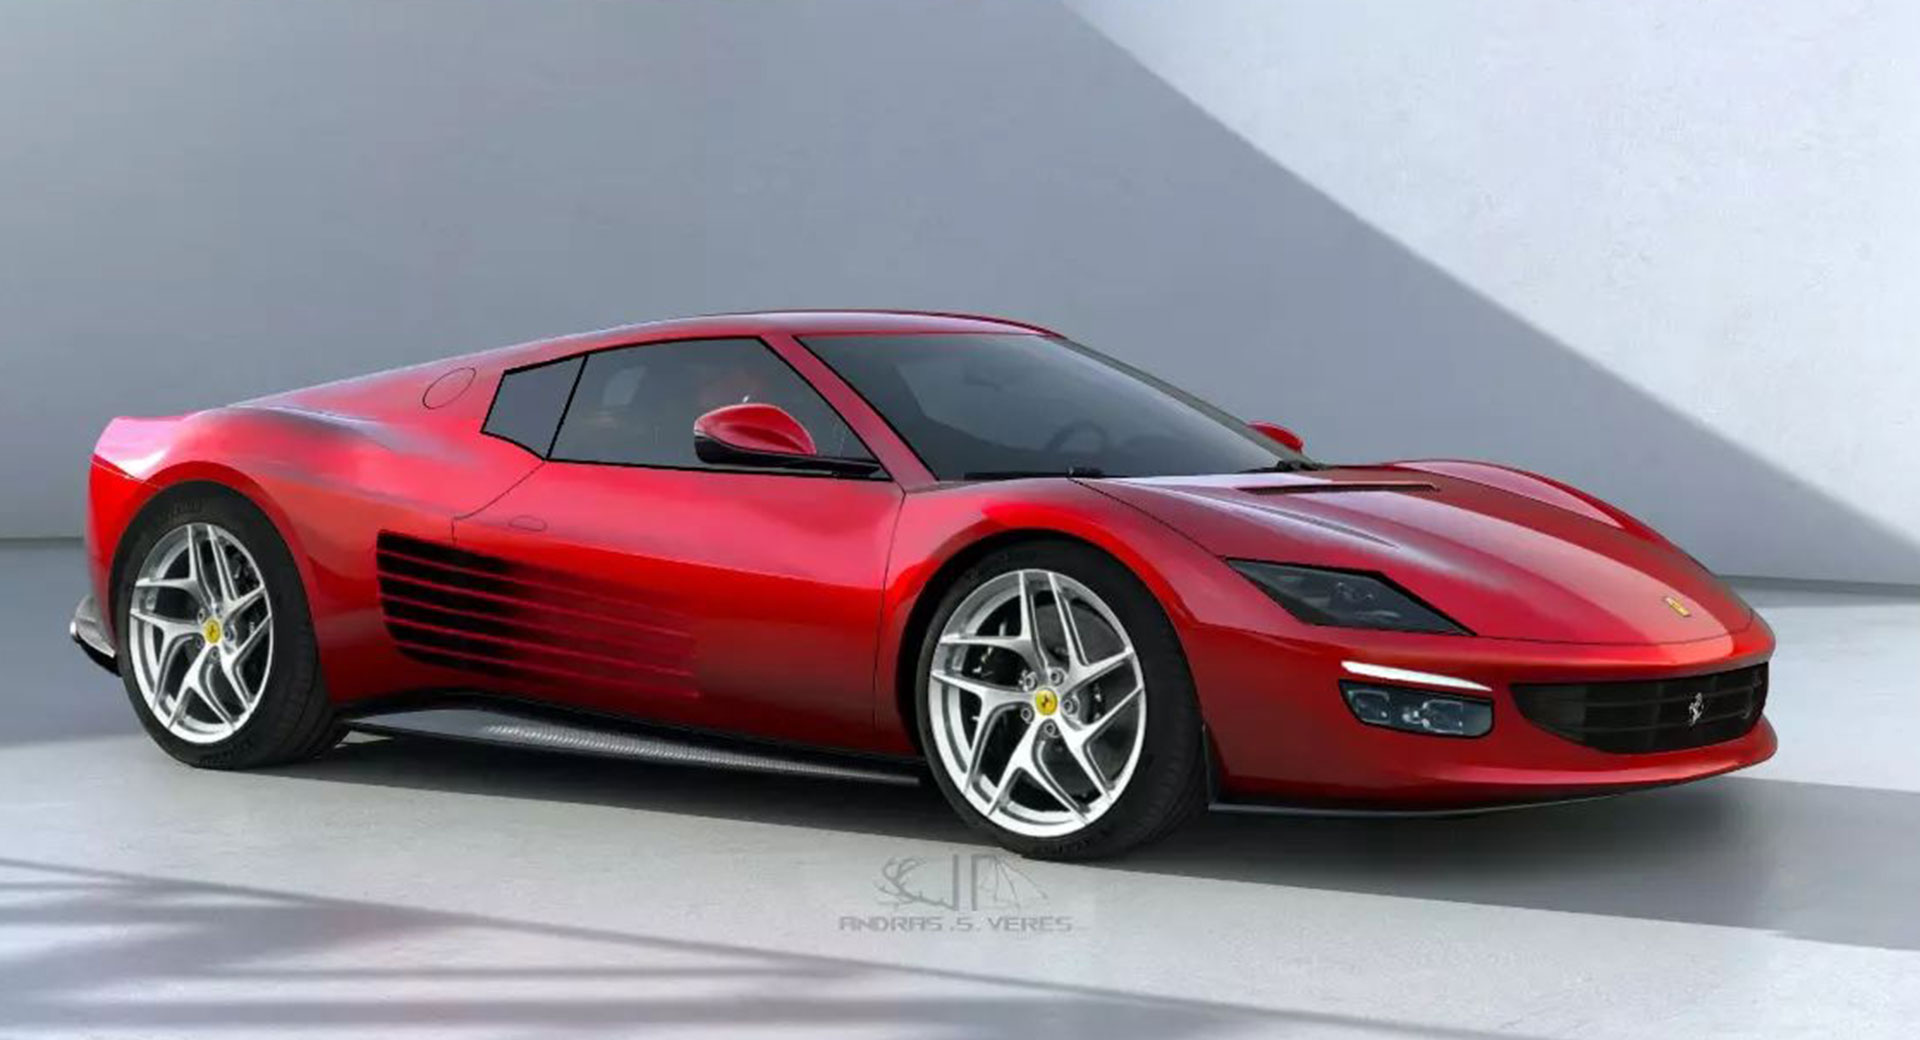 Should Ferrari Launch A Modern Homage To The Testarossa Like